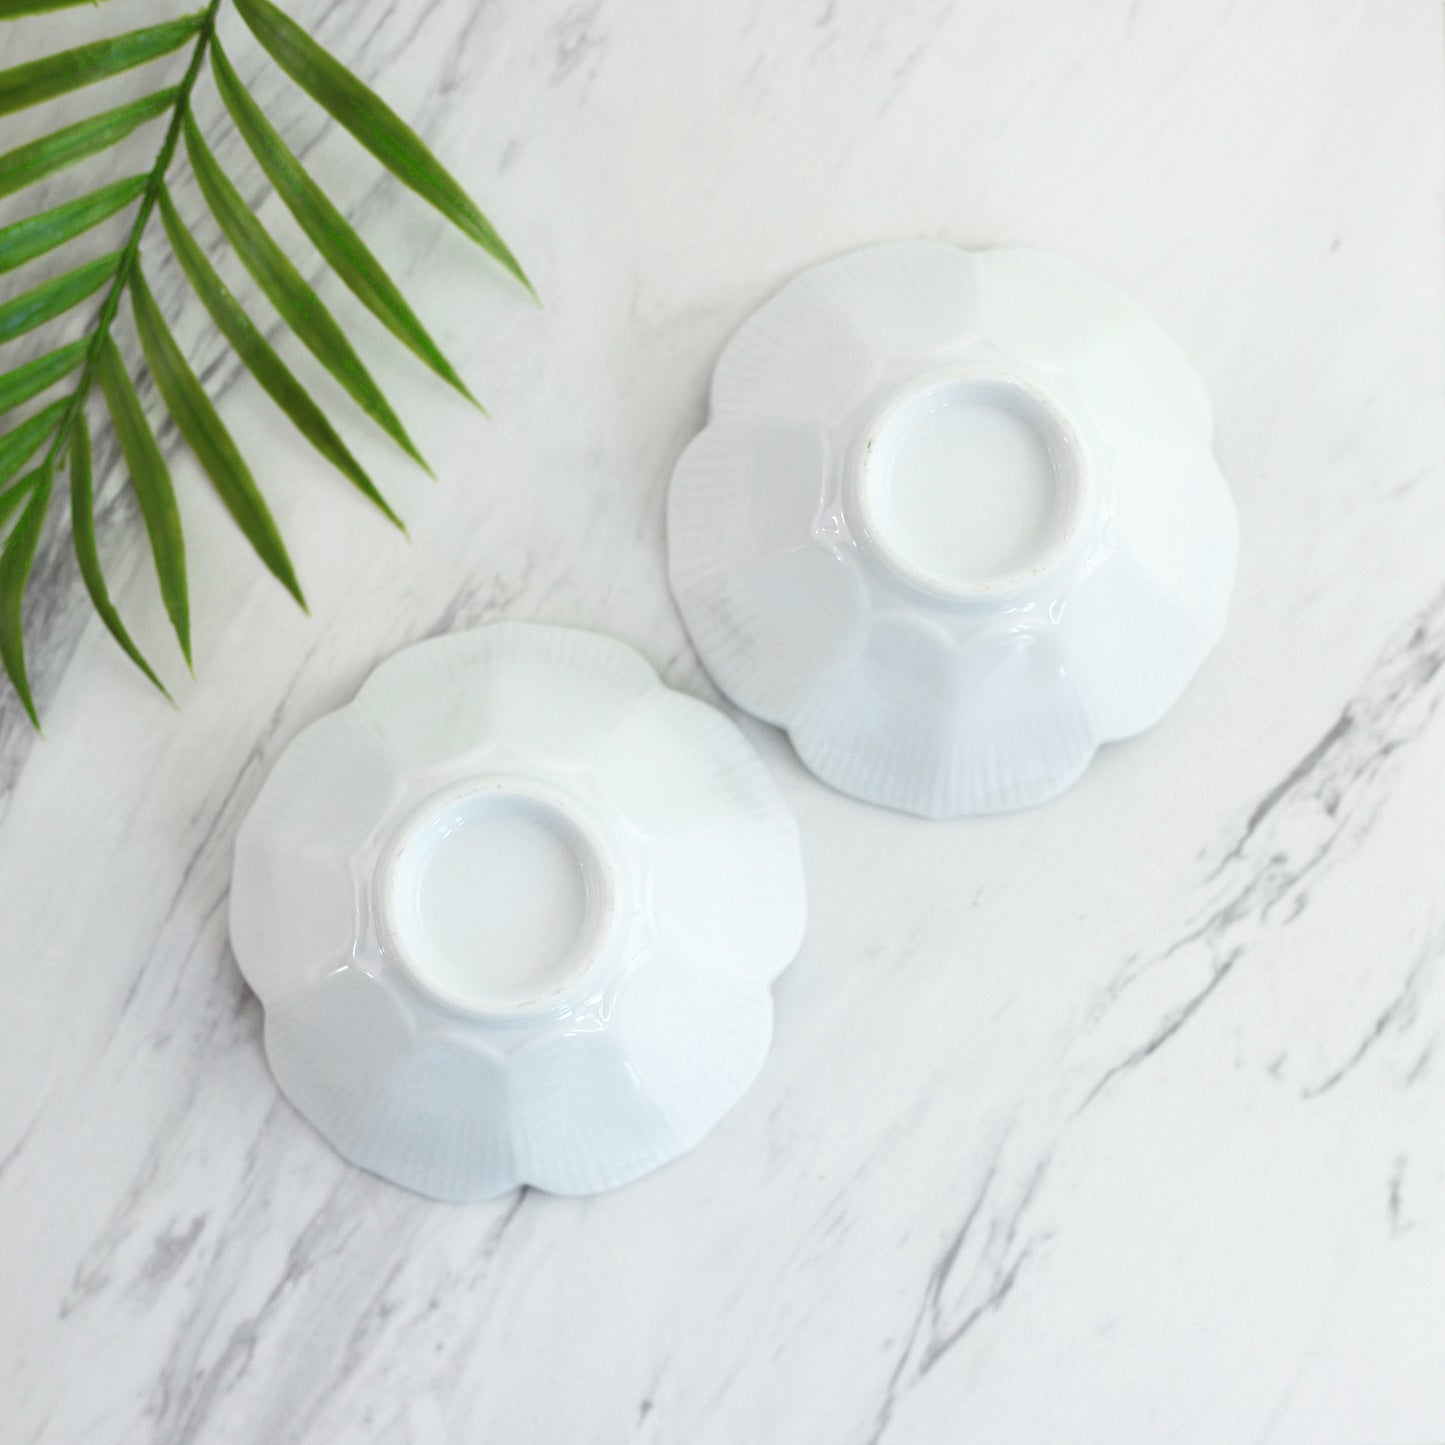 SOLD - Pair of White Porcelain Lotus Bowls